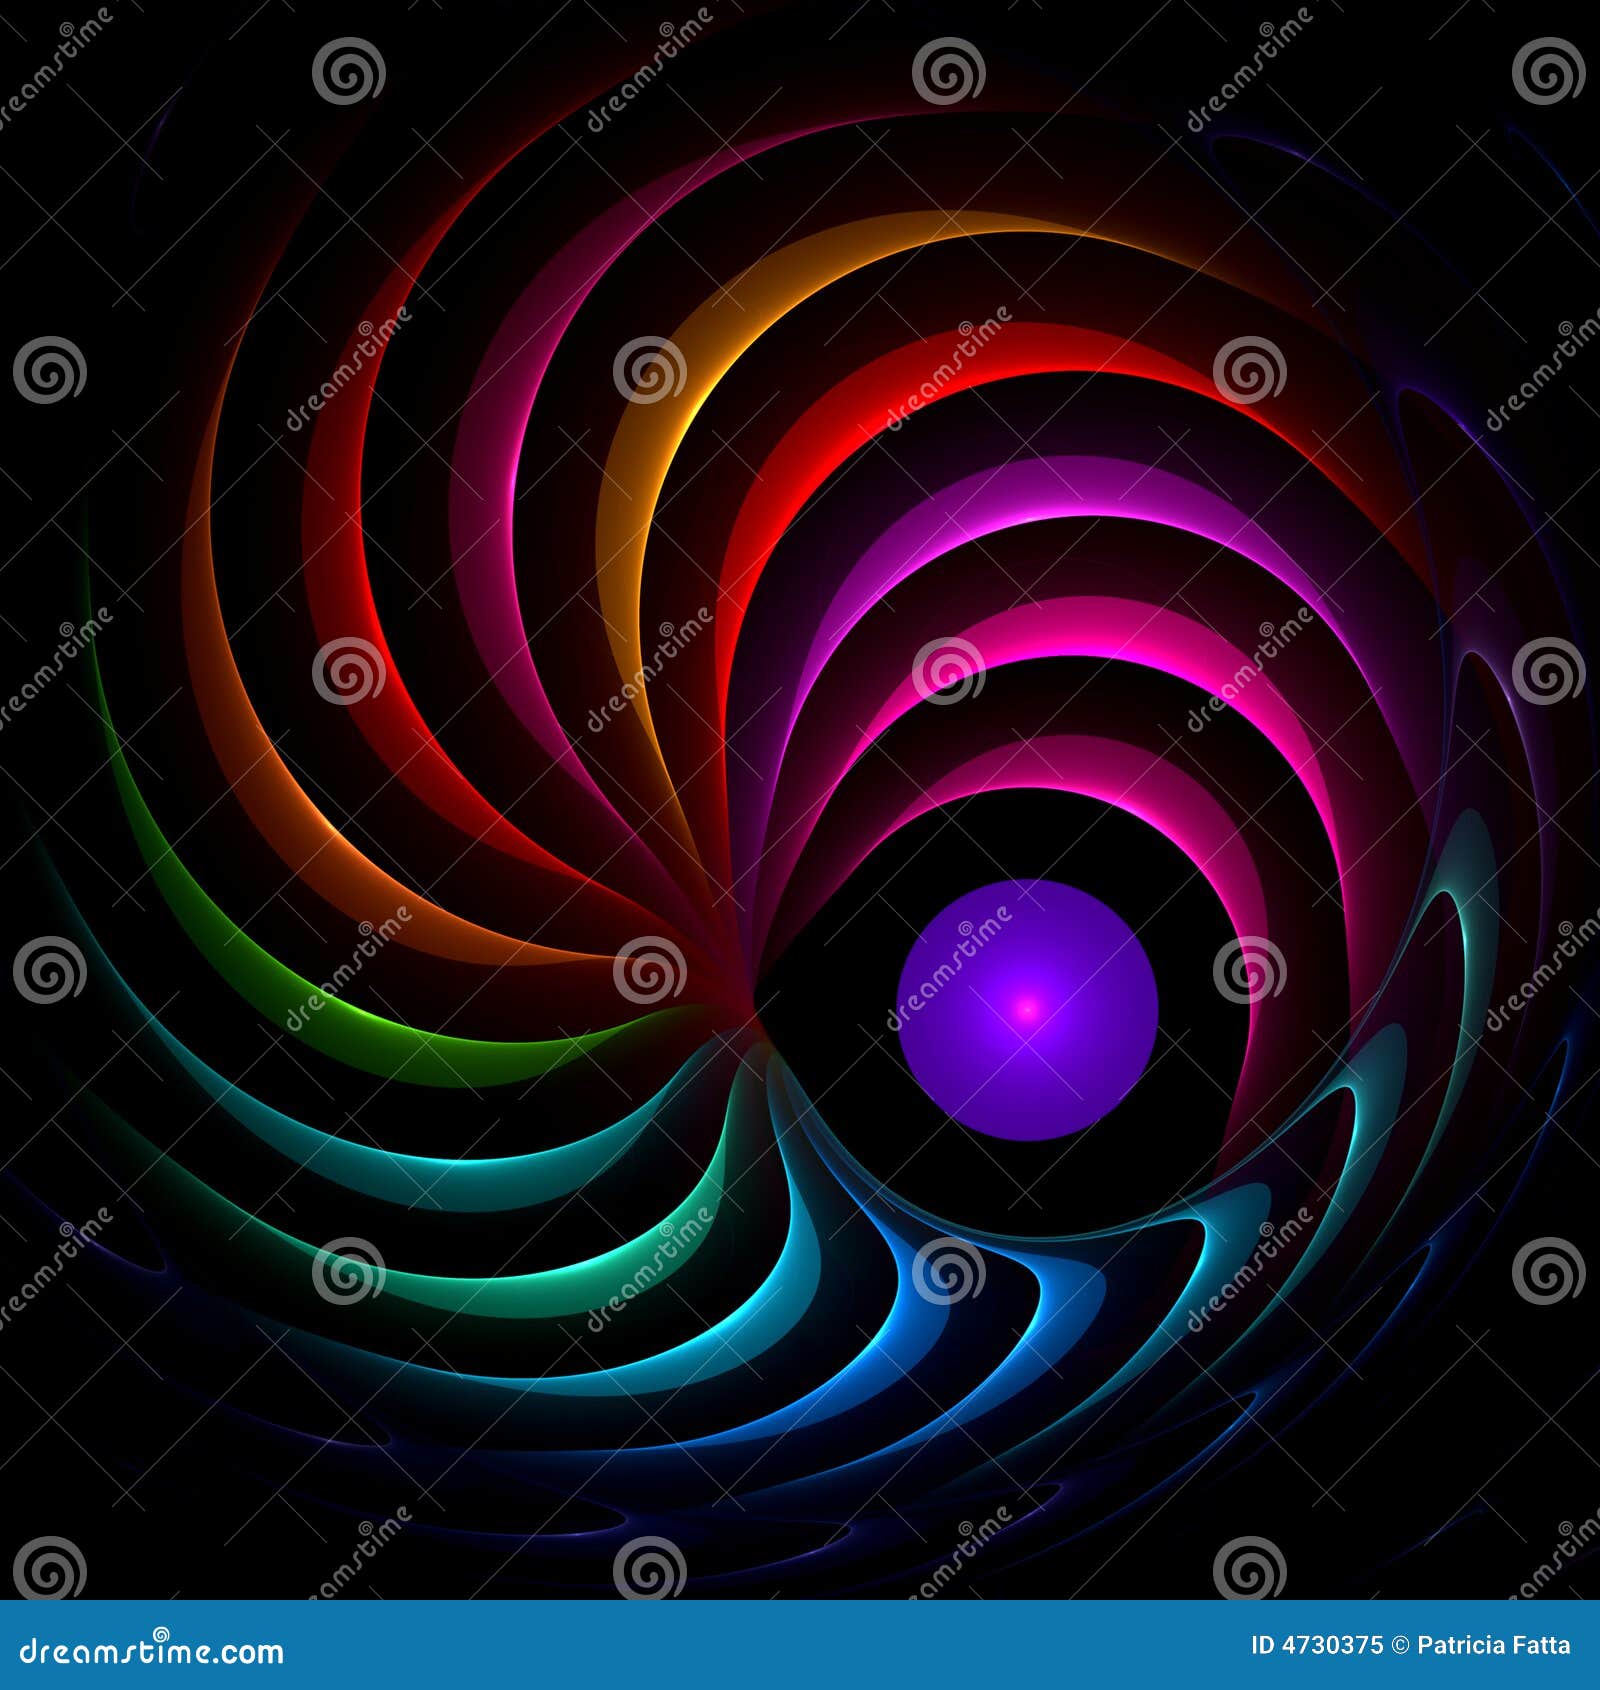 titanium rainbow spiral